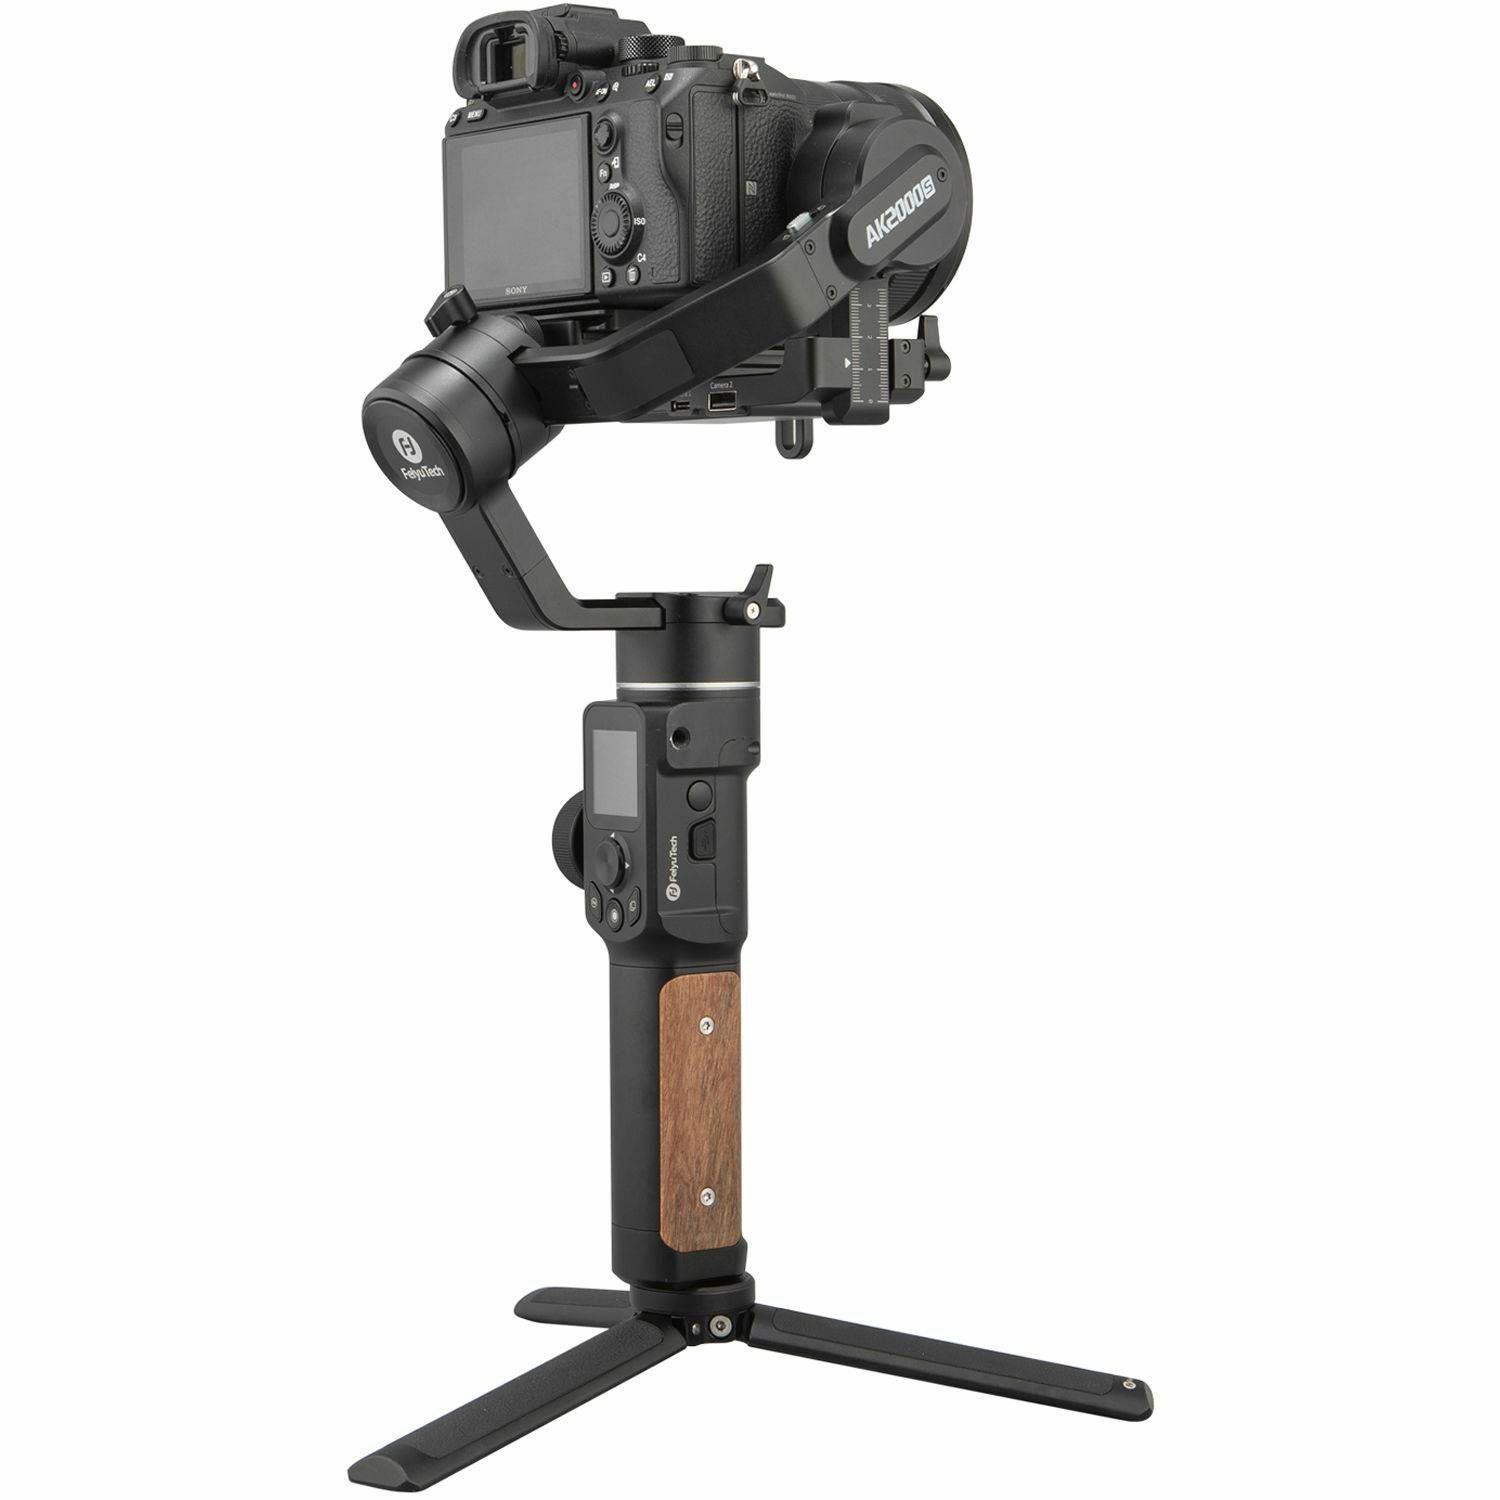 FeiyuTech AK2000S Standard Kit Gimbal Stabilizer 3-osni stabilizator za video snimanje